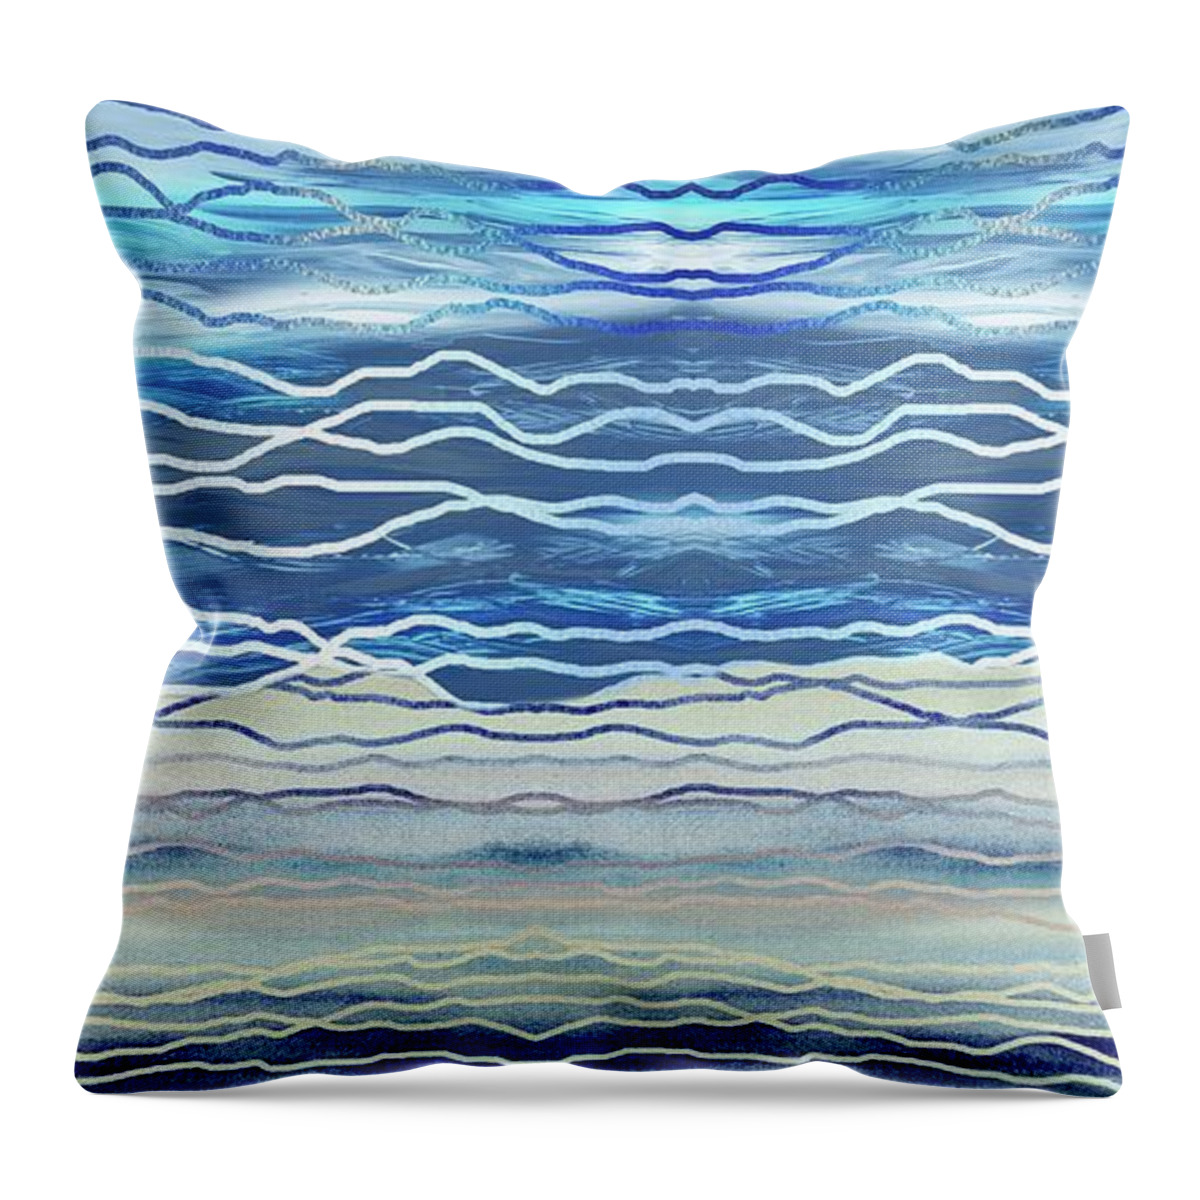 Turquoise Blue Throw Pillow featuring the painting Abstract Seascape Beach House Interior Decor III by Irina Sztukowski